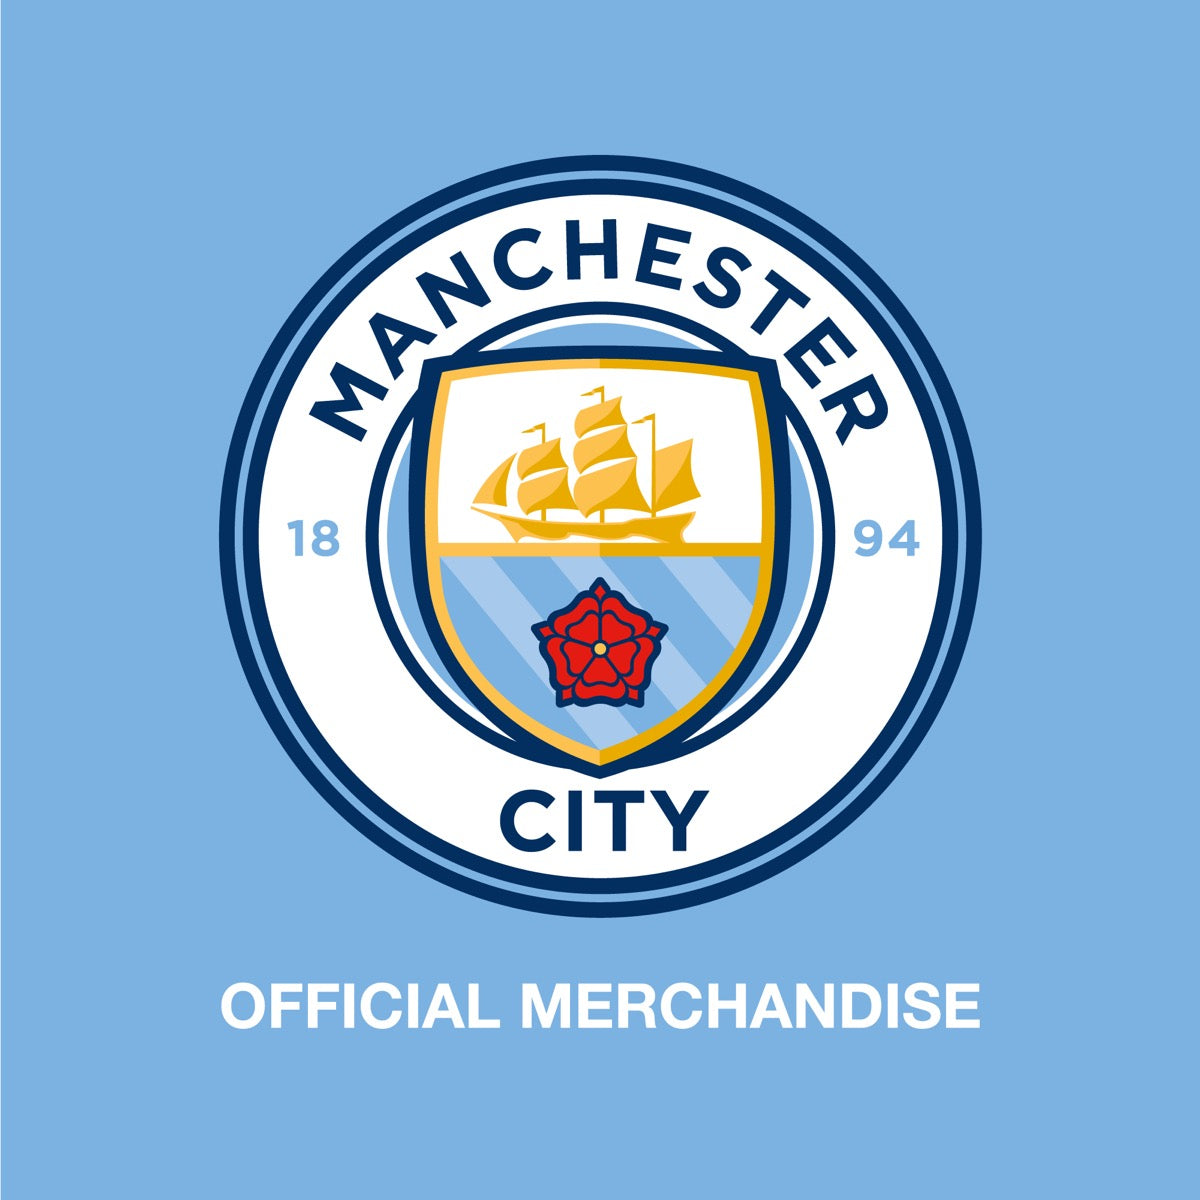 Manchester City FC - Rodri 23/24 Player Decal + Bonus Wall Sticker Set